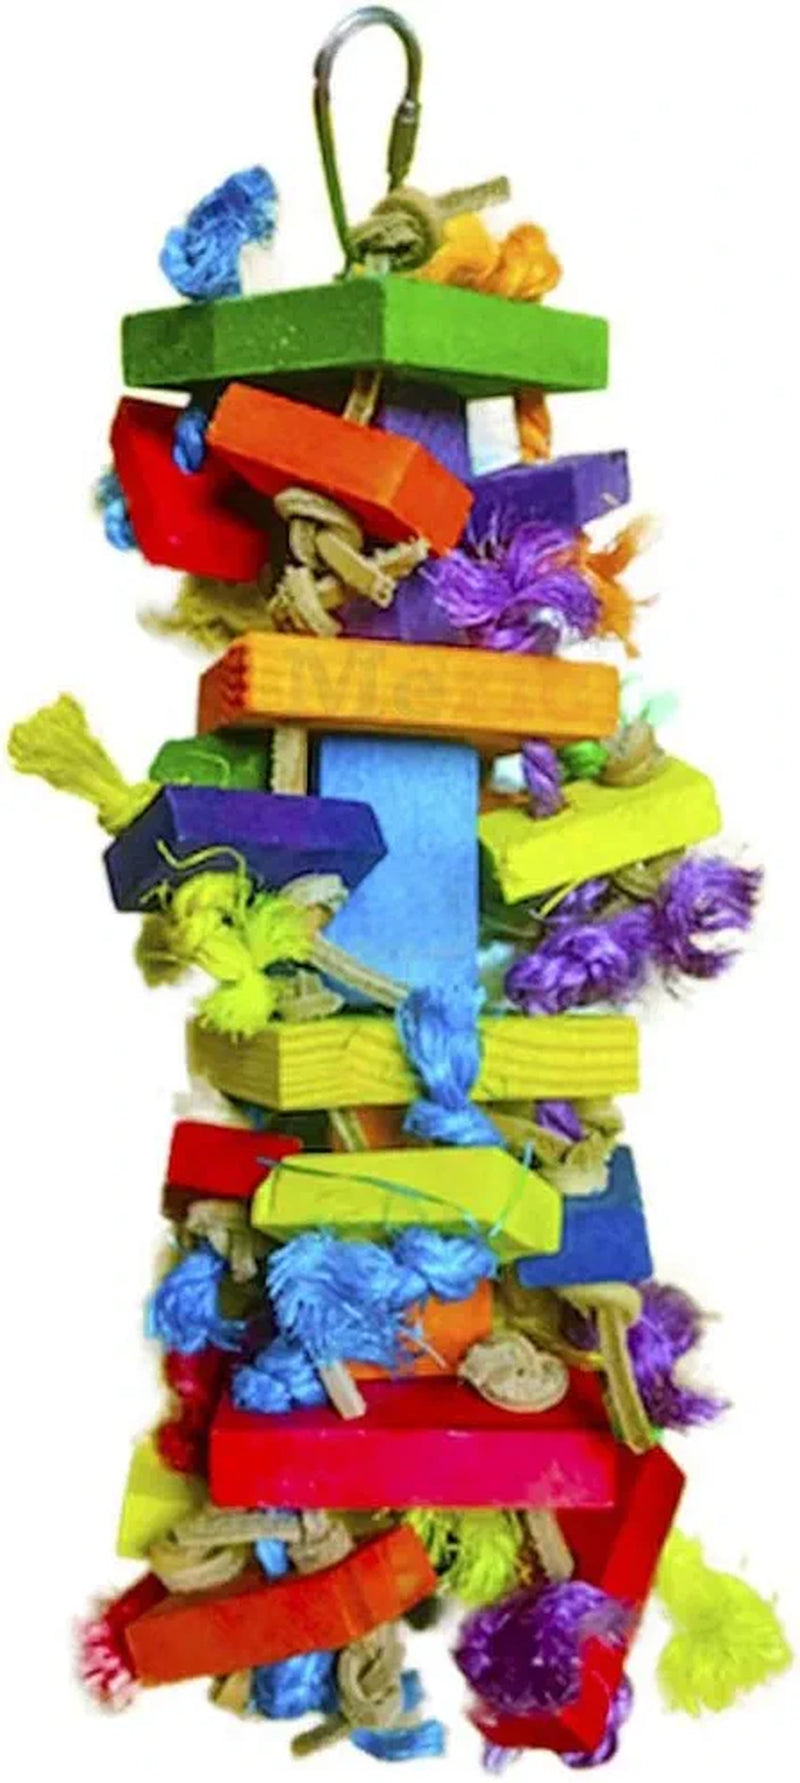 Meric Block Toy for House Birds, Nibbling Keeps Beaks Trimmed, Preening Keeps Feathers Groomed, Edible, Food-Grade Multicolored Wooden Blocks, 1-Pc